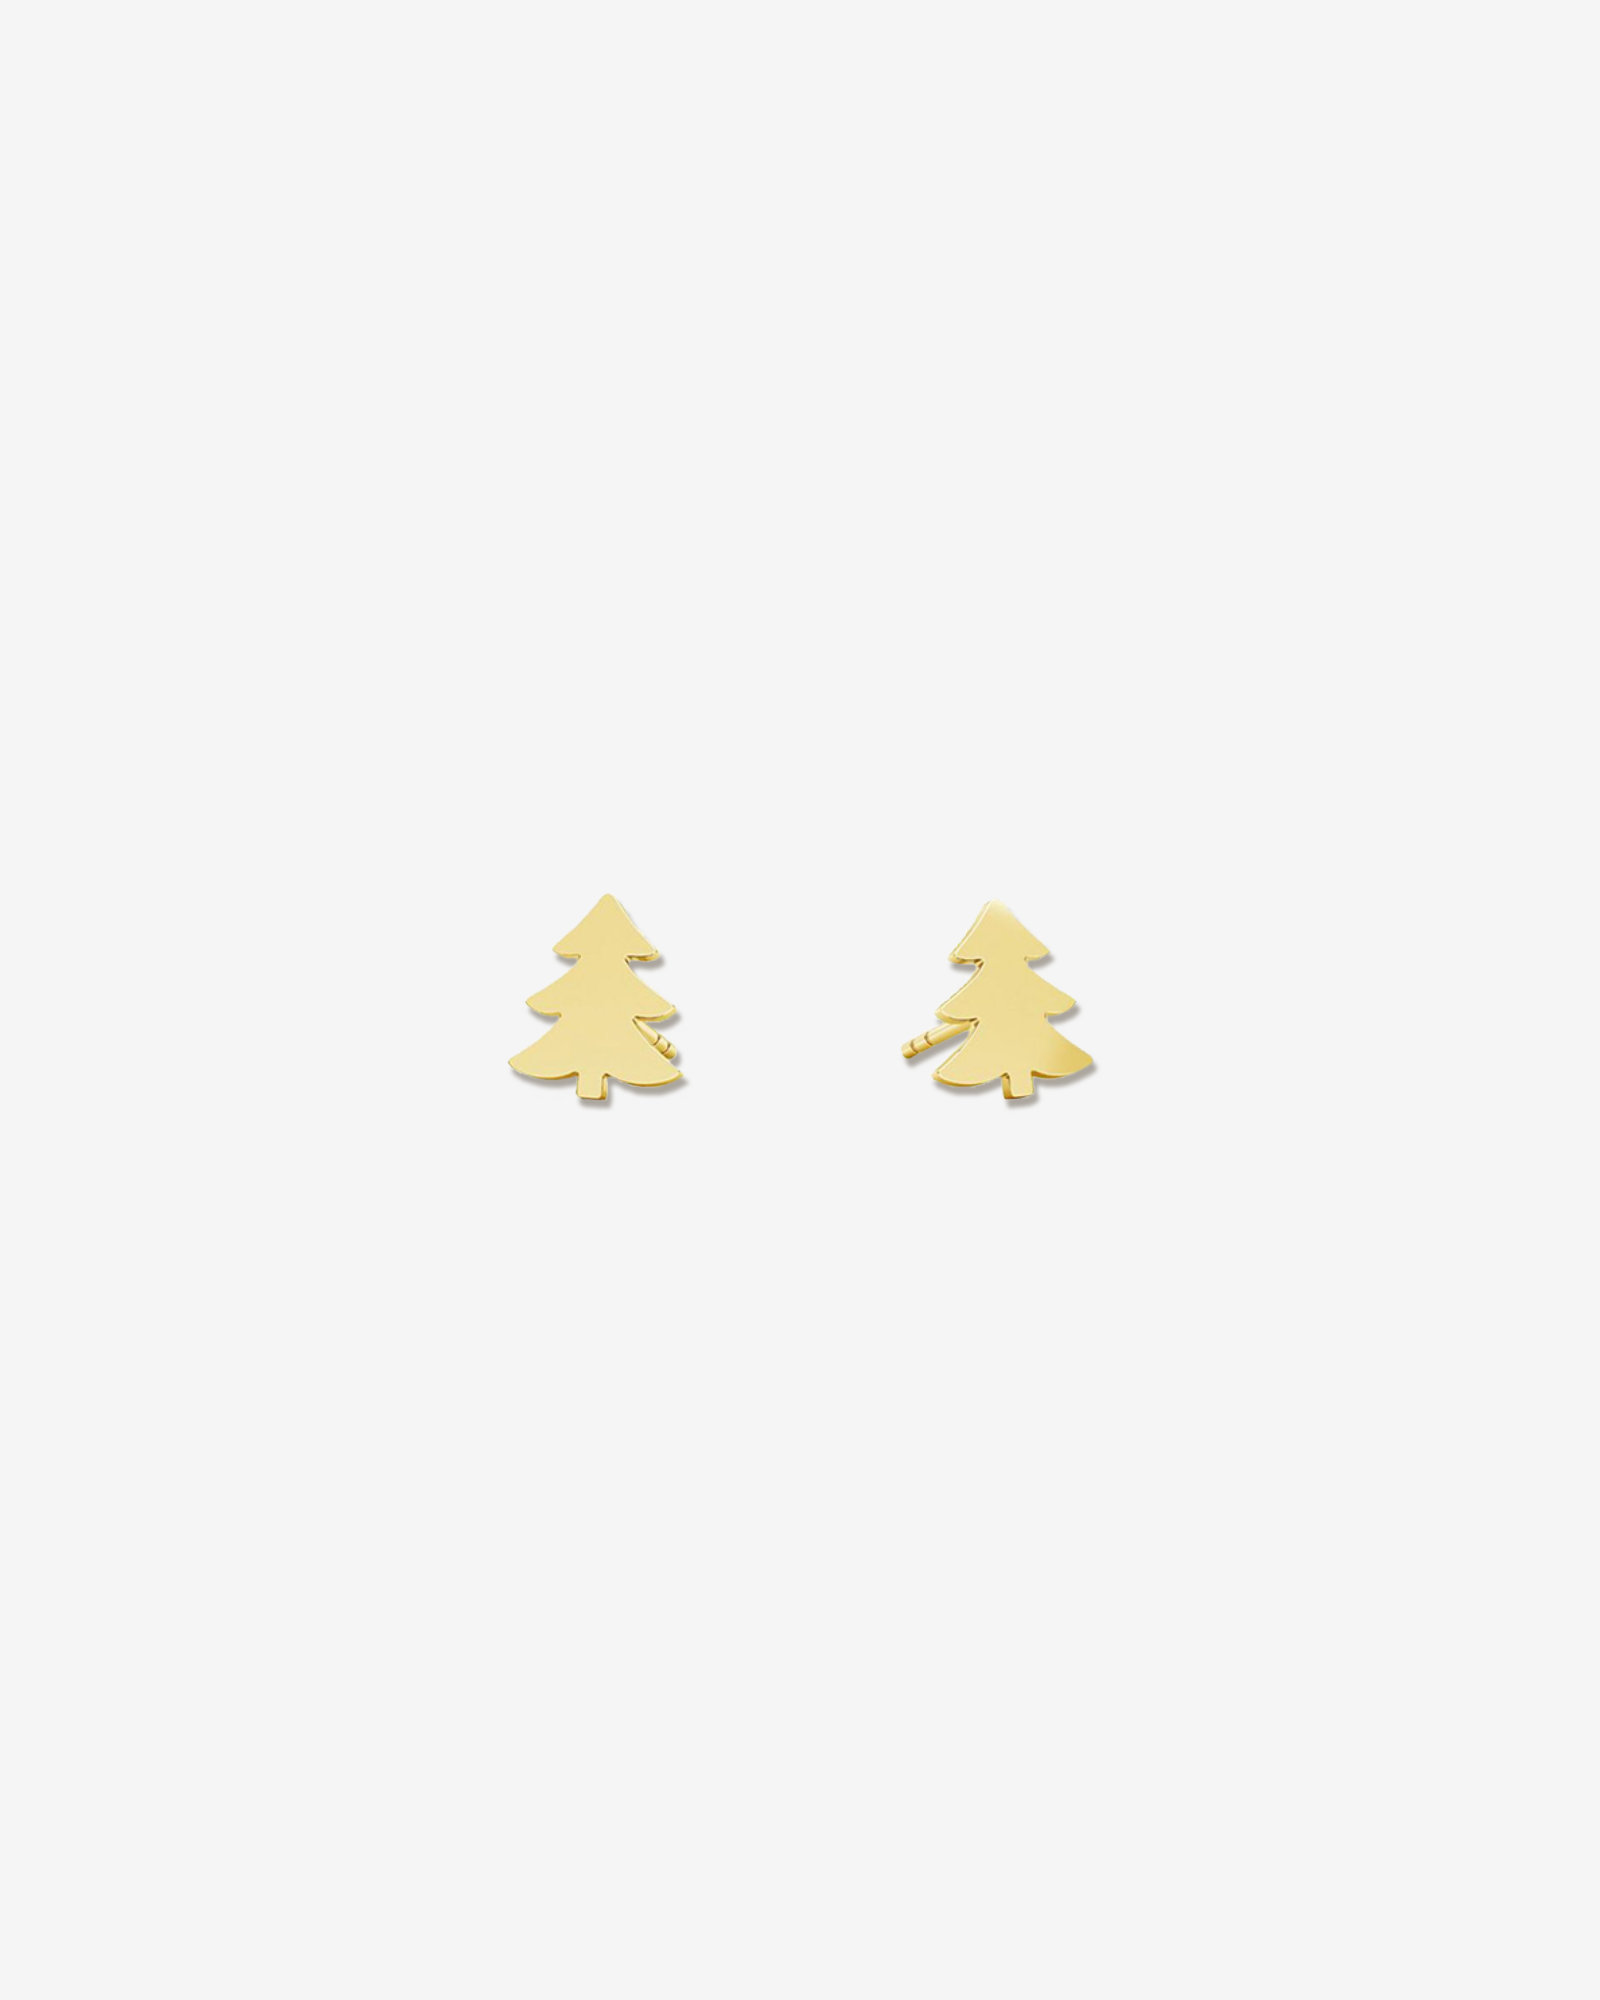 Pine - Silver Stud Earrings